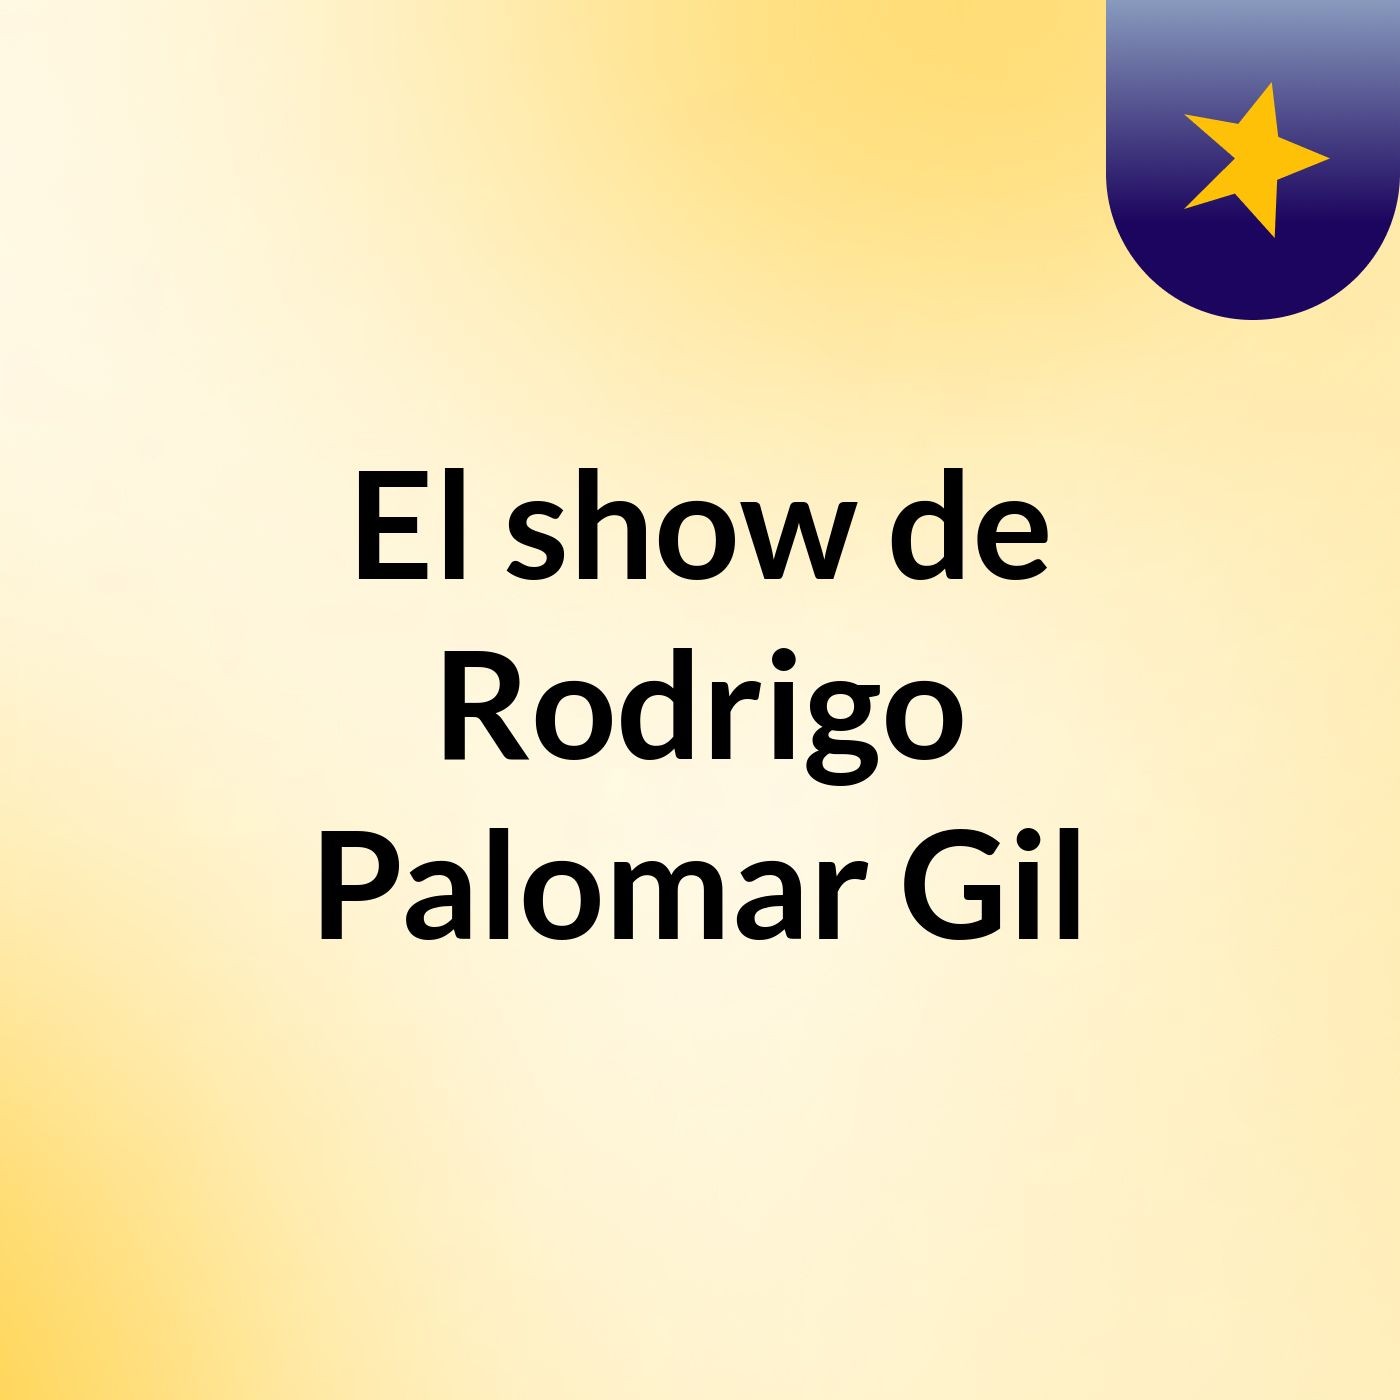 El show de Rodrigo Palomar Gil